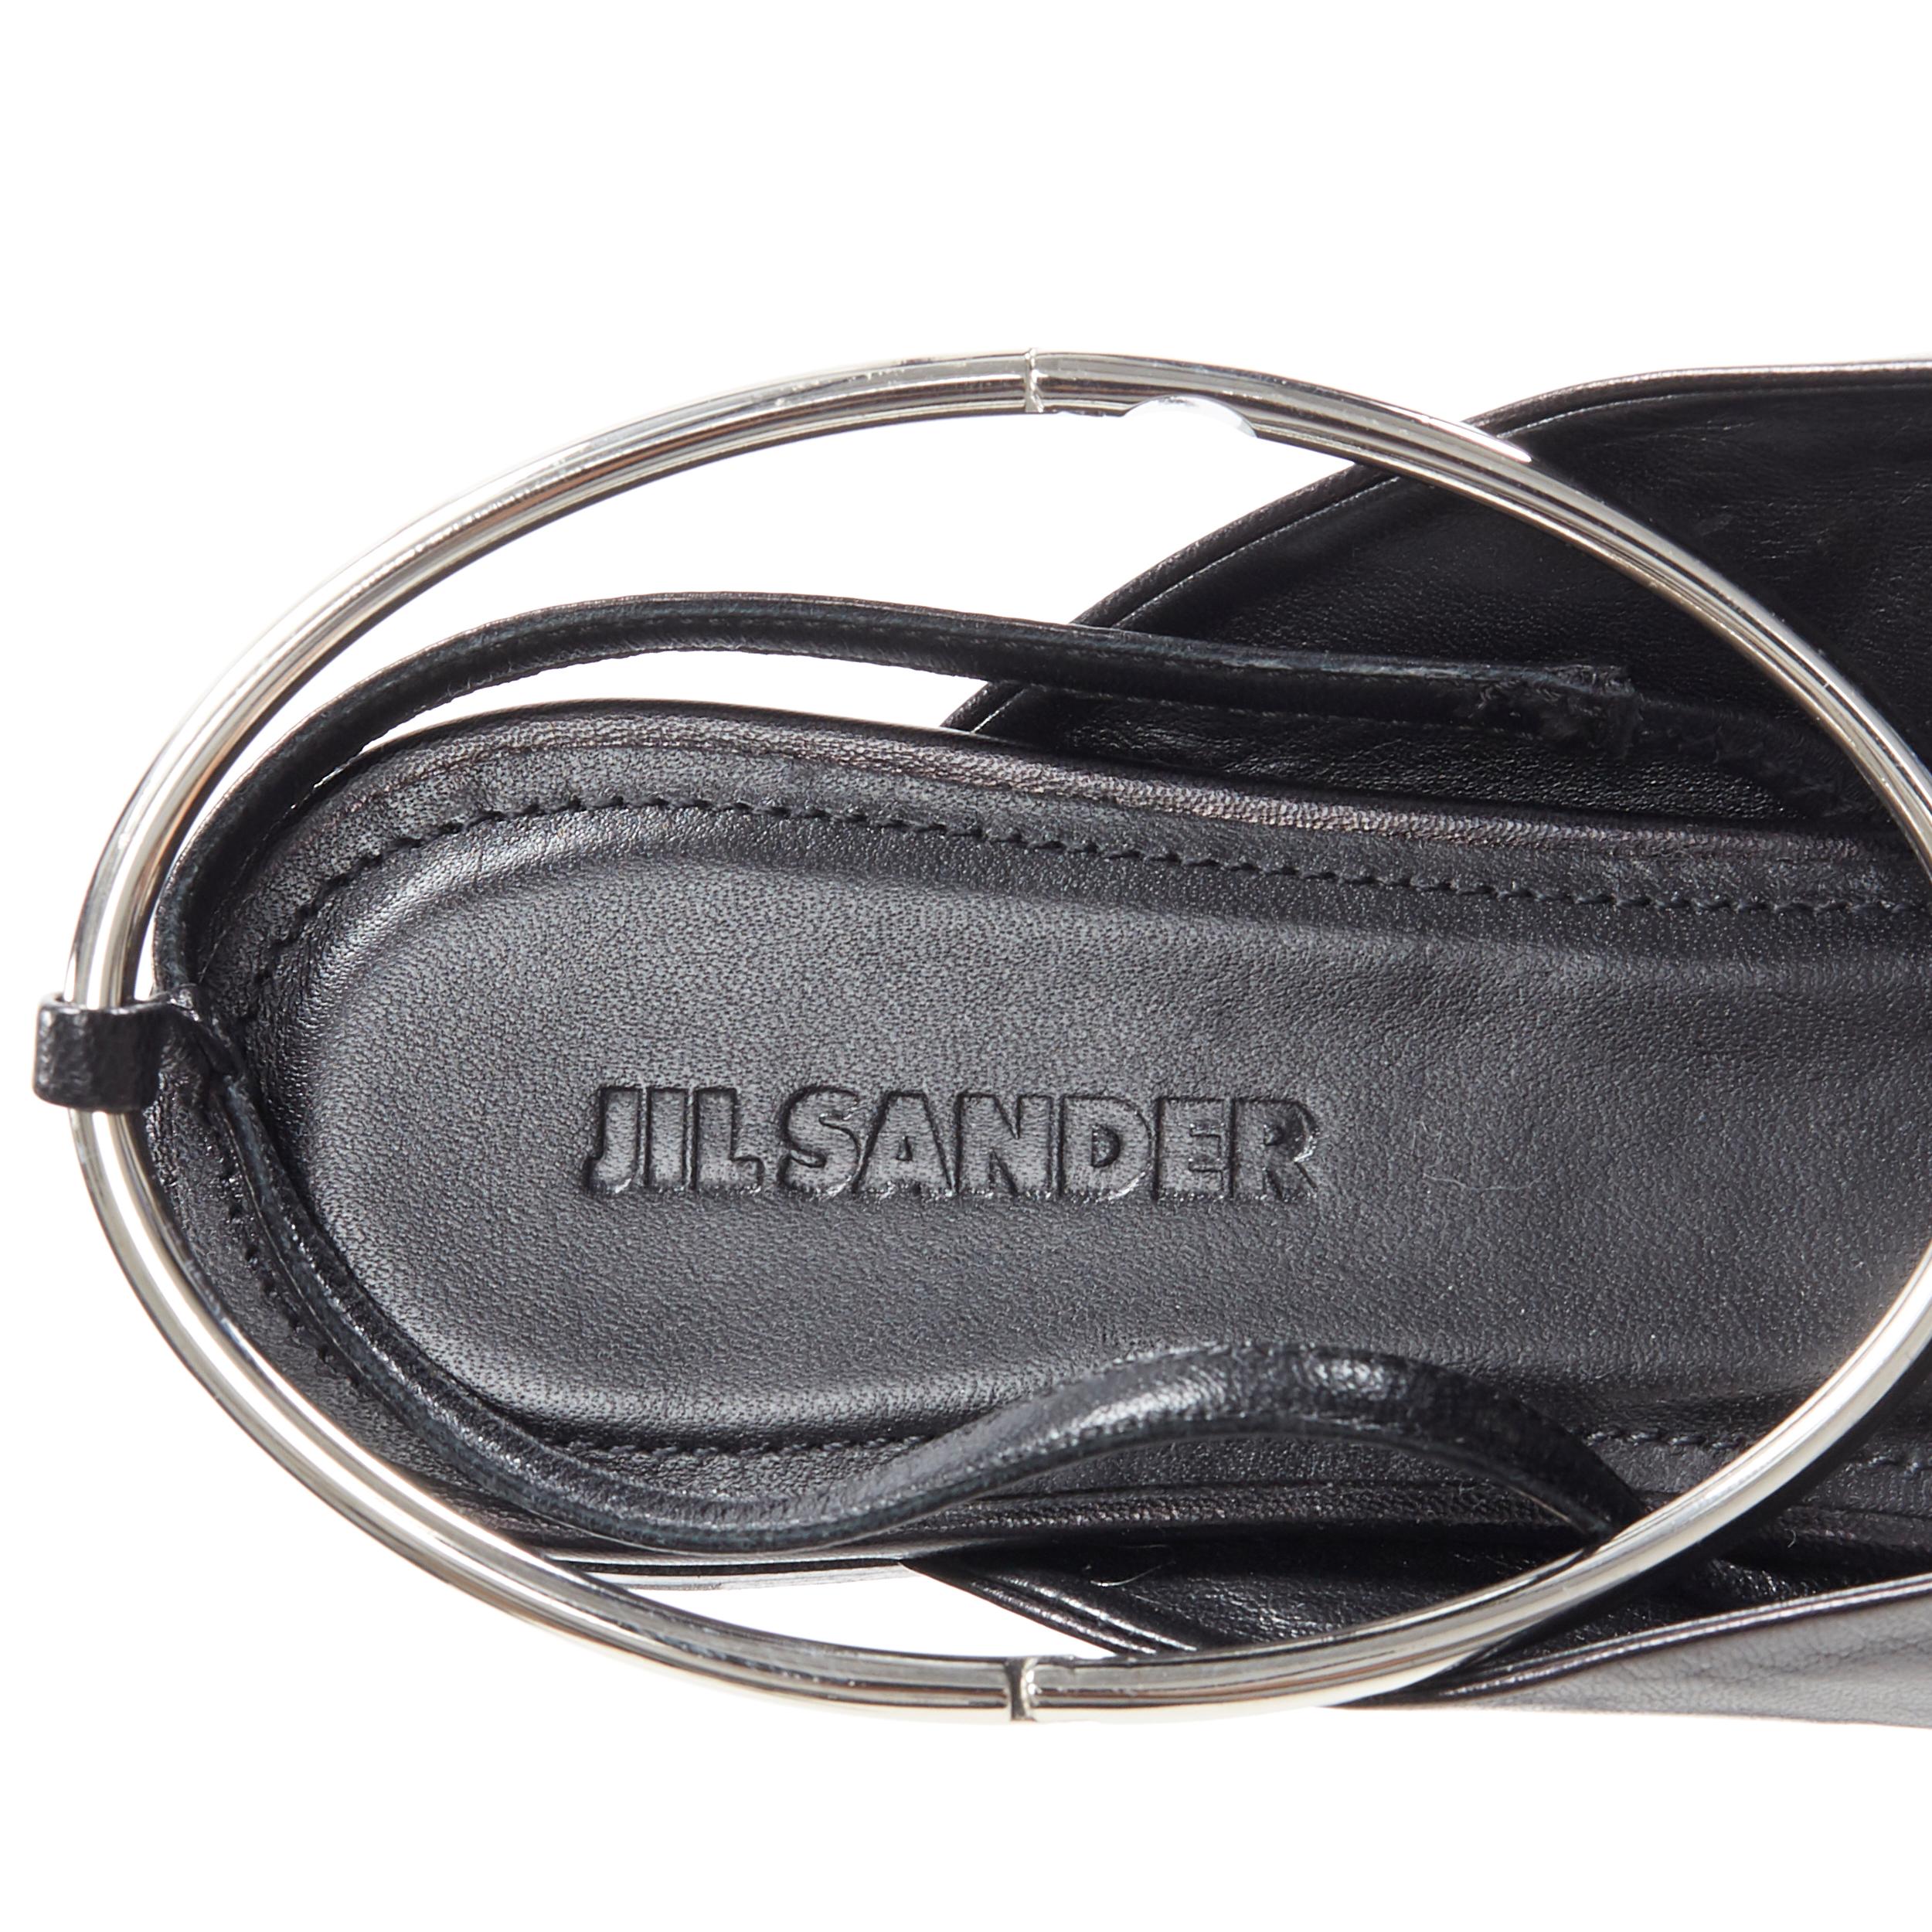 JIL SANDER black leather point toe  silver metal cuff anklet flats shoes EU38 2